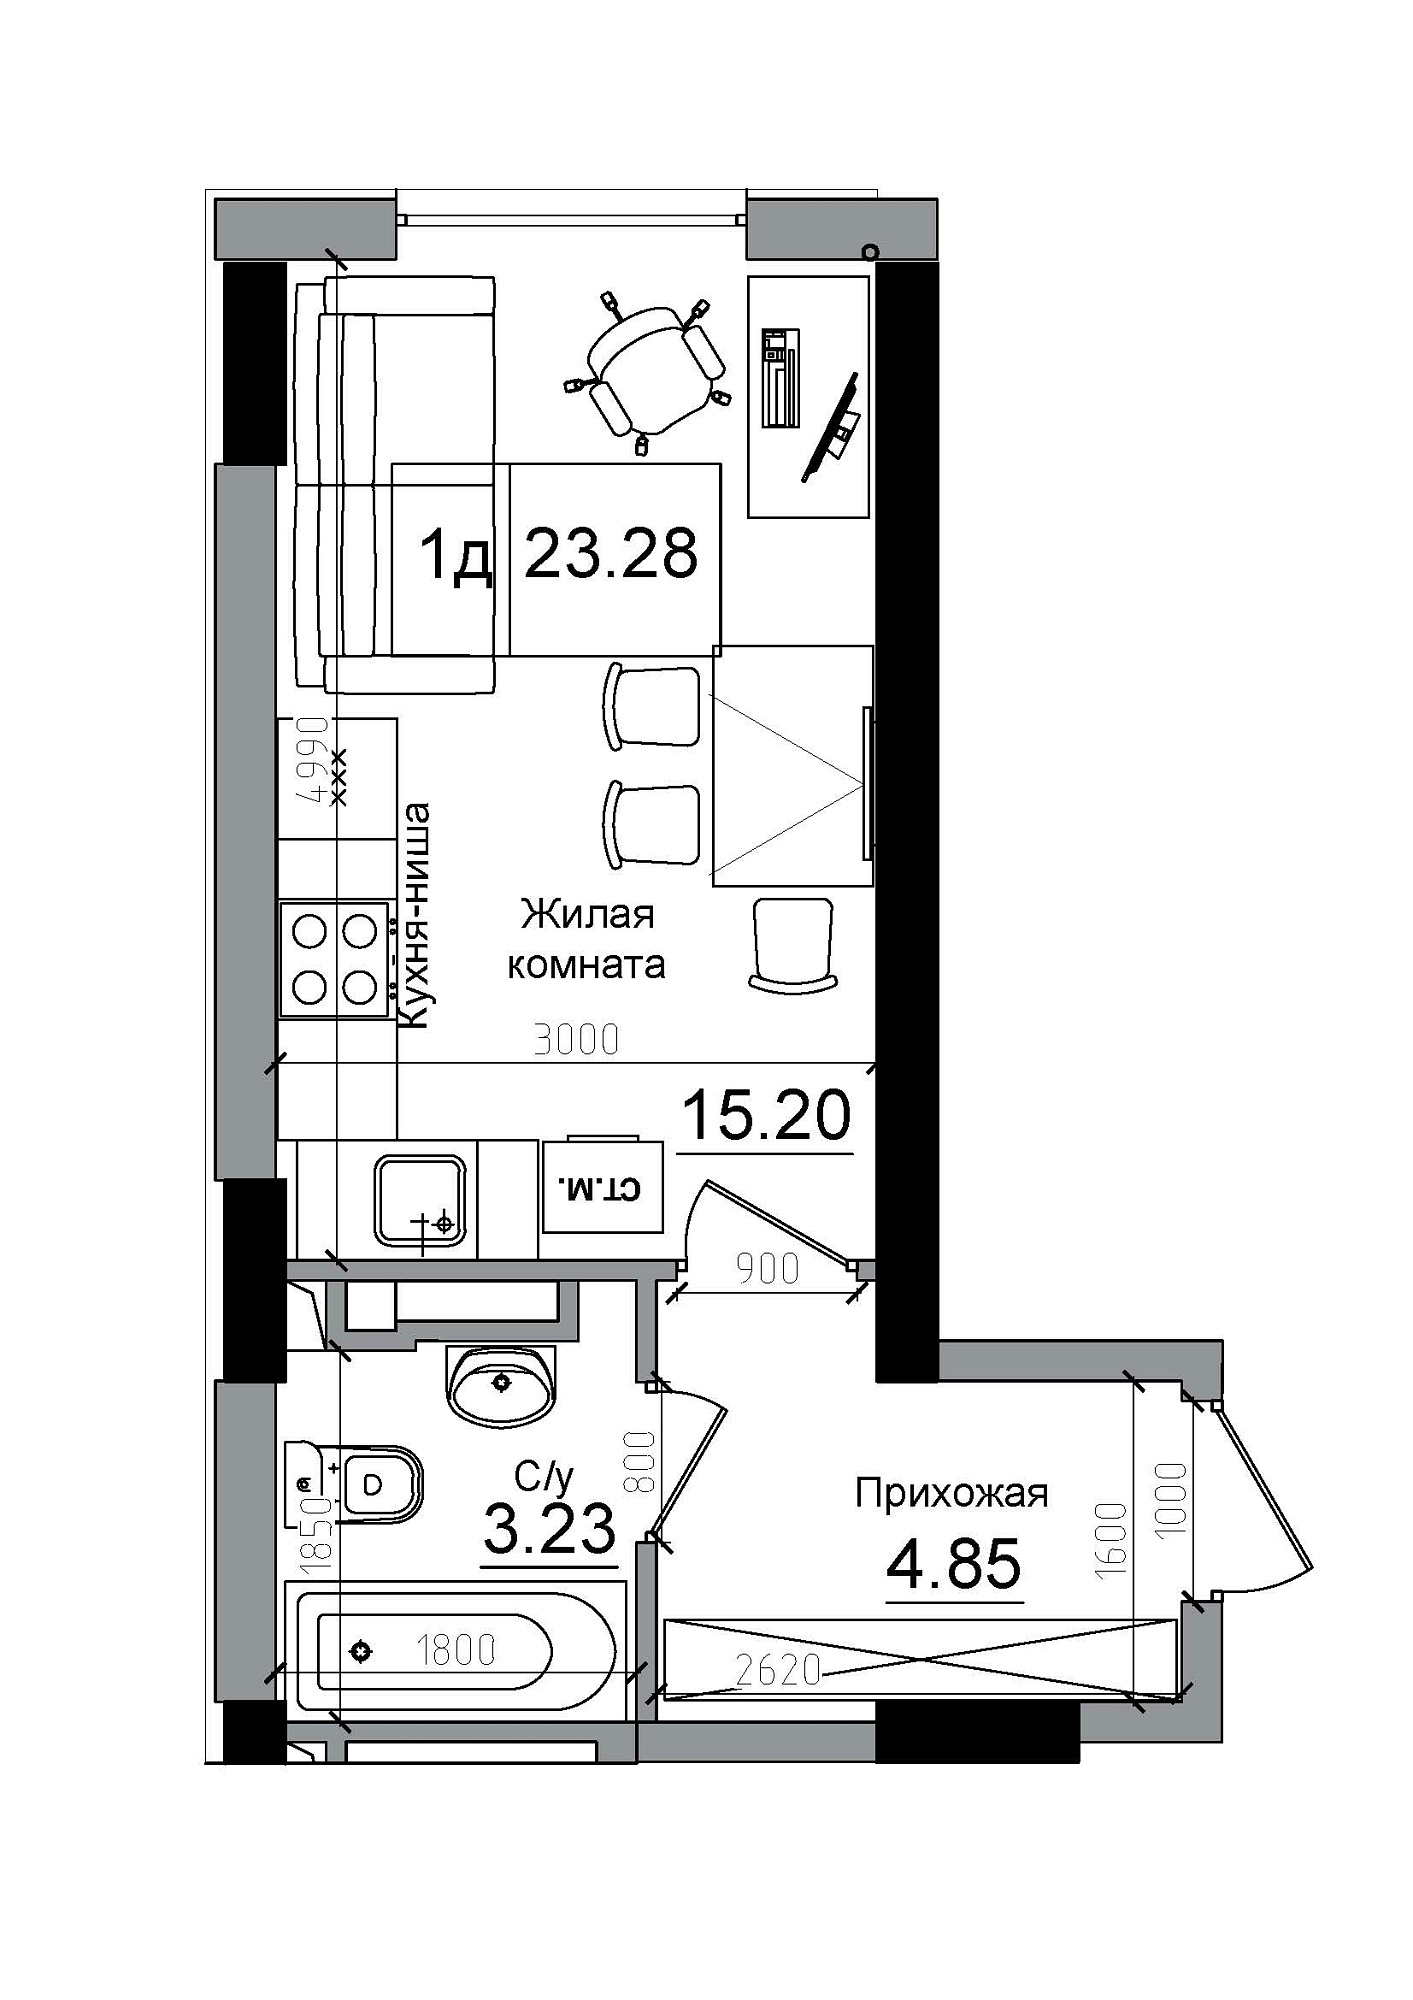 Planning Smart flats area 23.28m2, AB-12-03/00005.